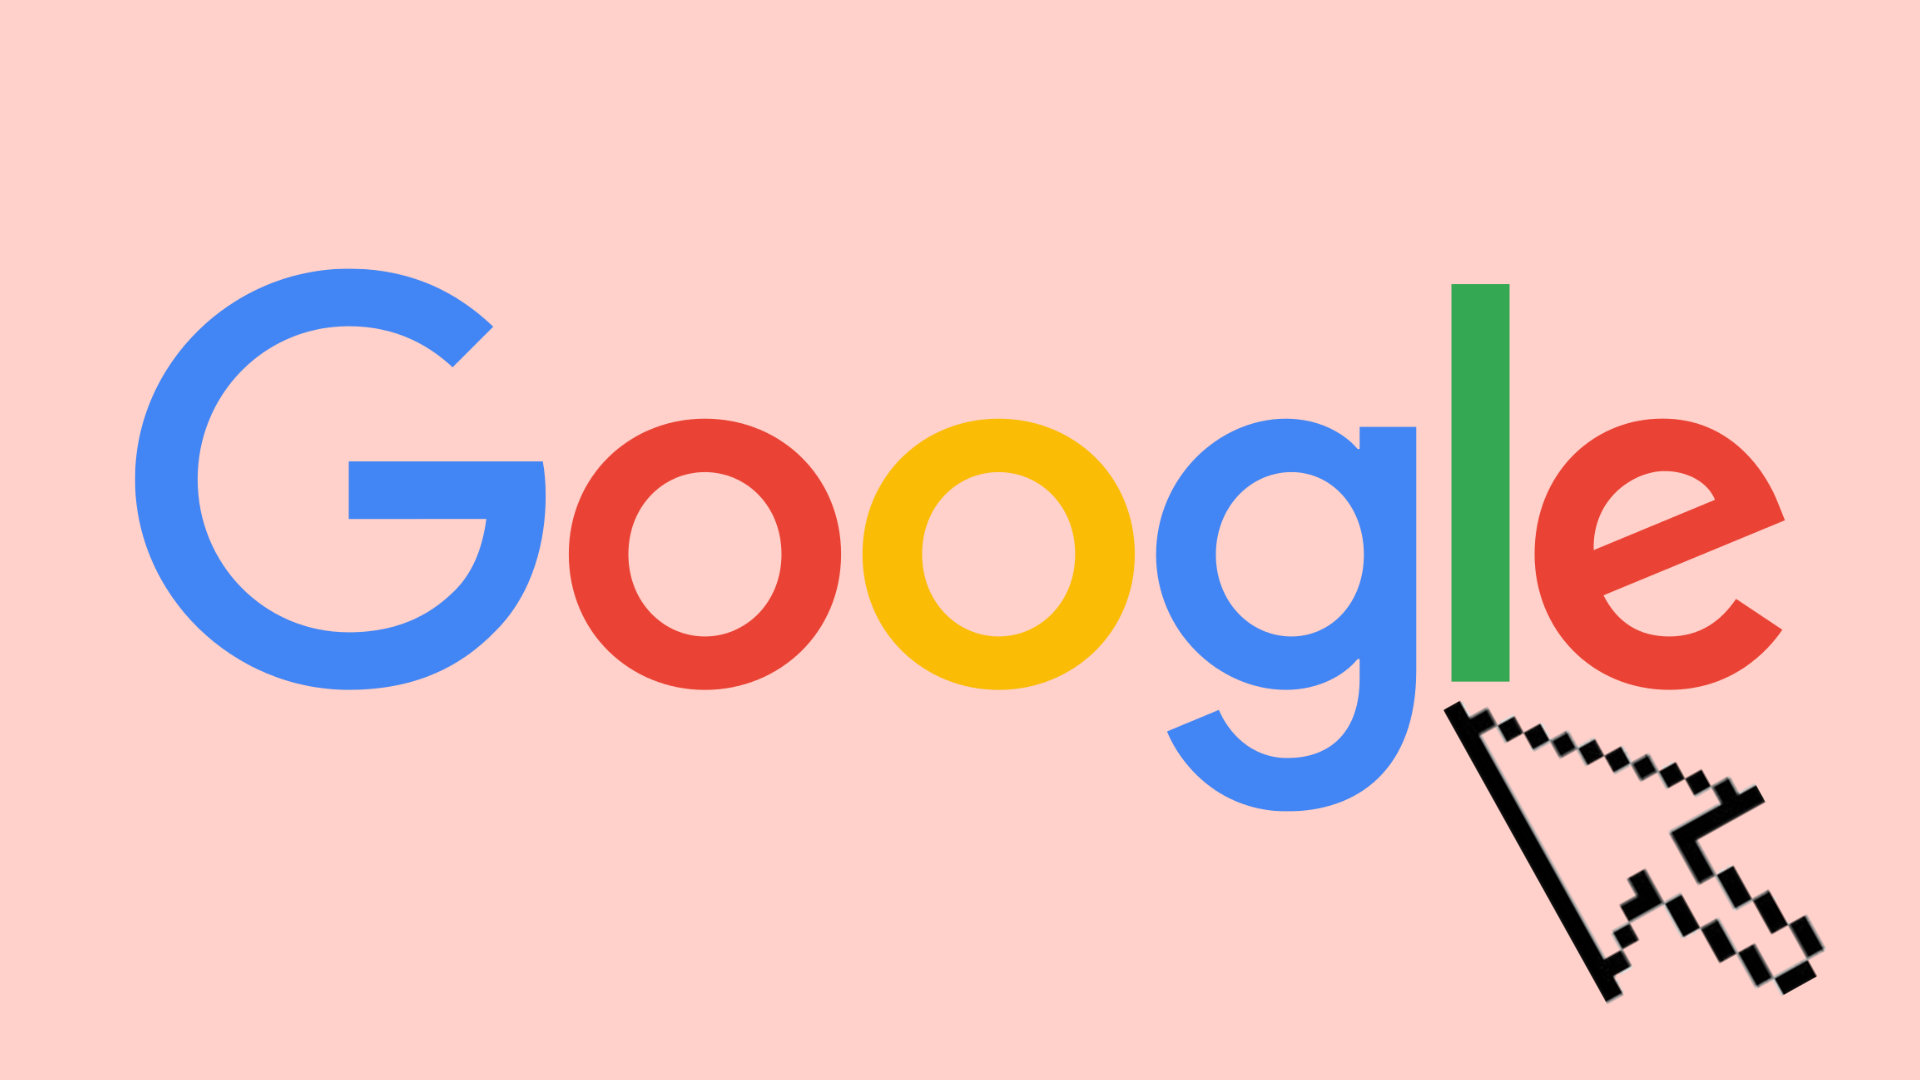 Тематический рисунок гугл 4 буквы. Гугл. Google логотип. Диктофон Google Google one. Google one 2022.